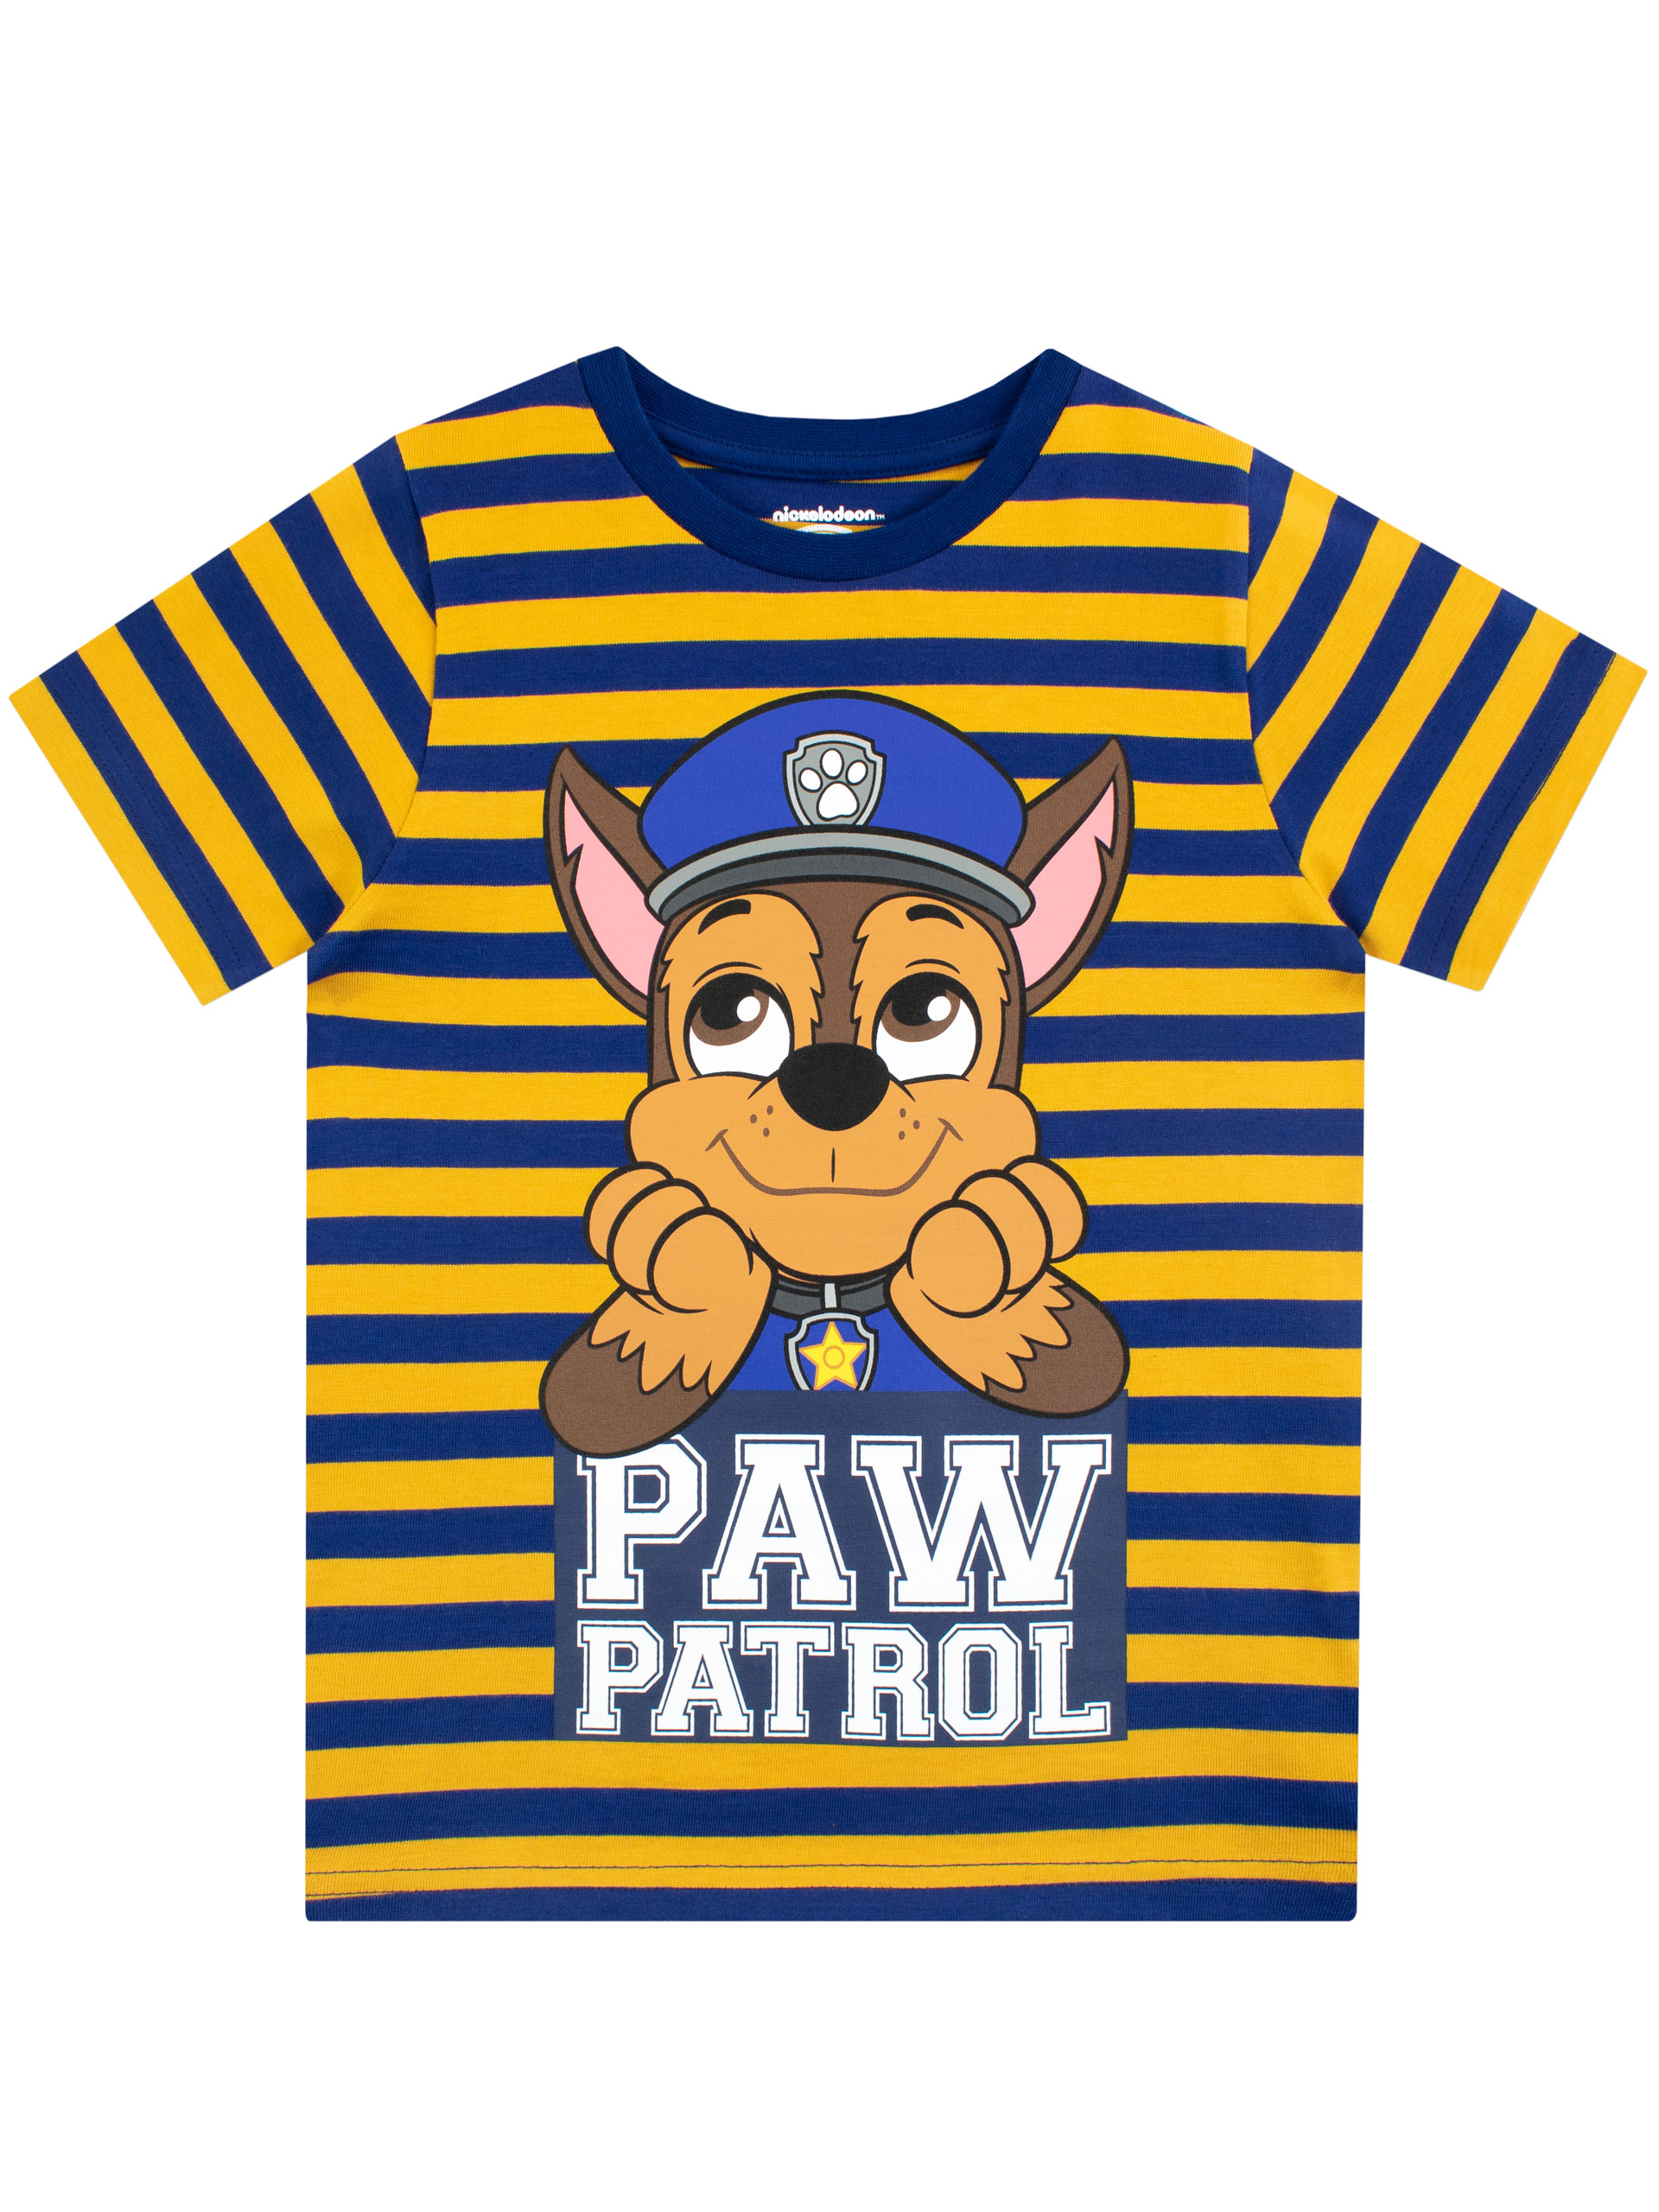 Paw Patrol Chase Short Sleeve T-shirt Sizes 2T-8 - Walmart.com